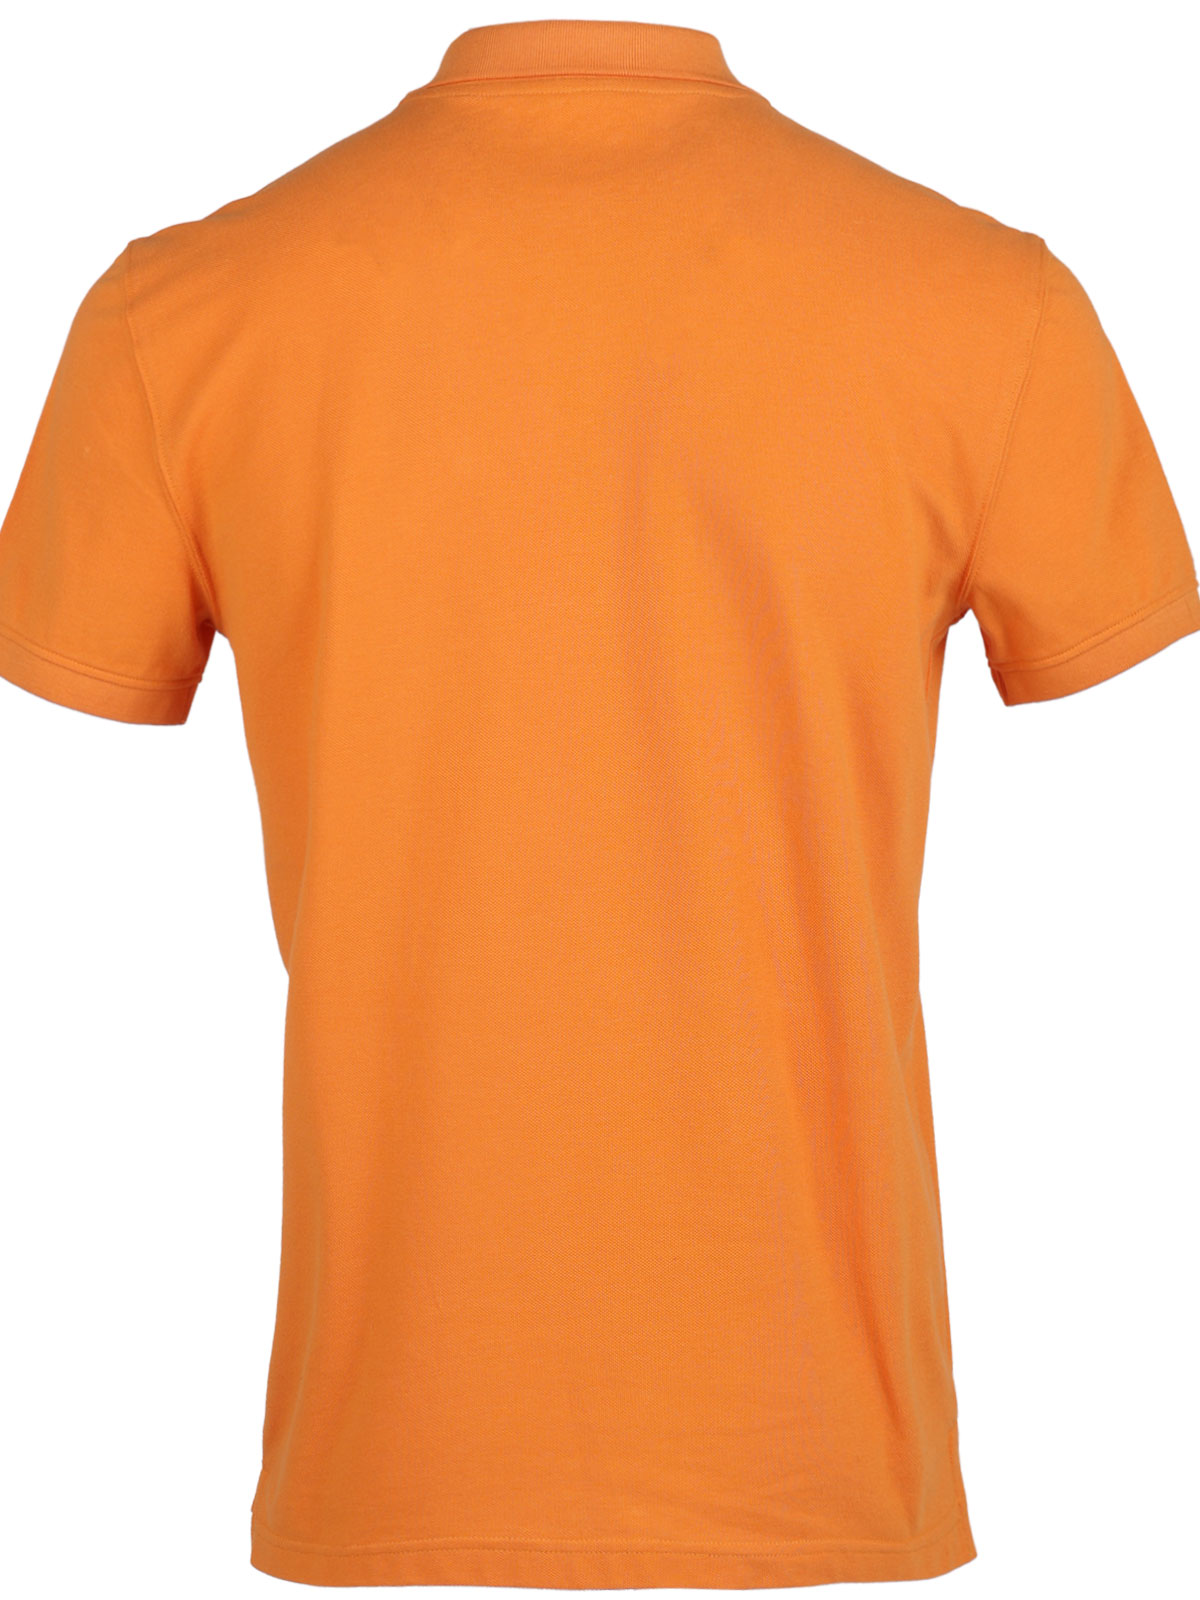 Tshirt σε πορτοκαλί χρώμα με πλεκτό για - 93434 € 37.12 img2